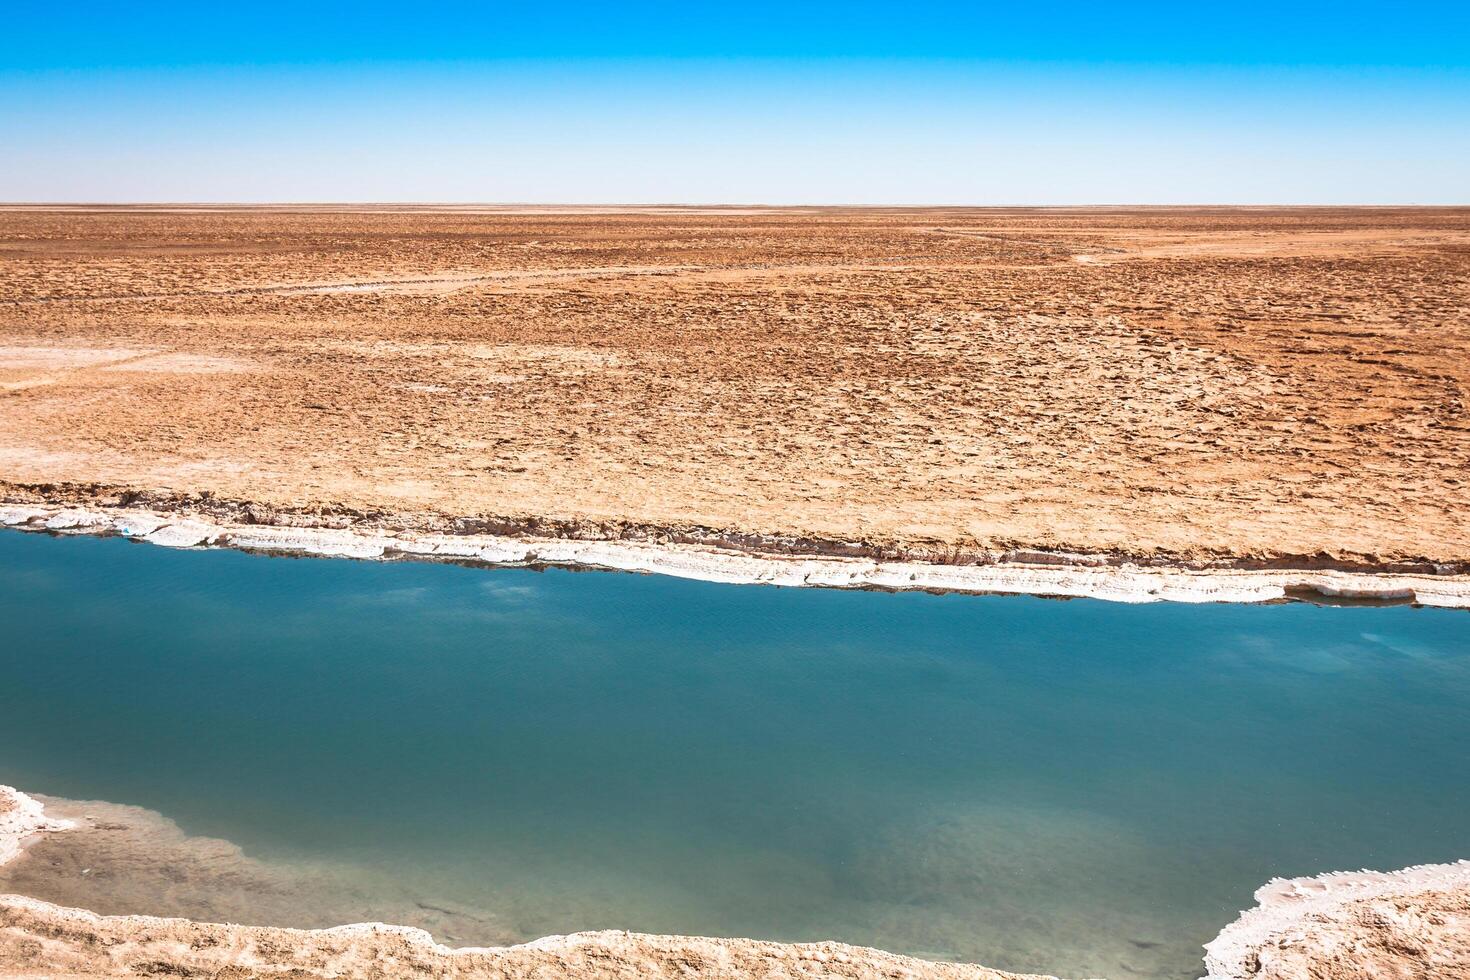 chott el djerid, zout meer in Tunesië foto